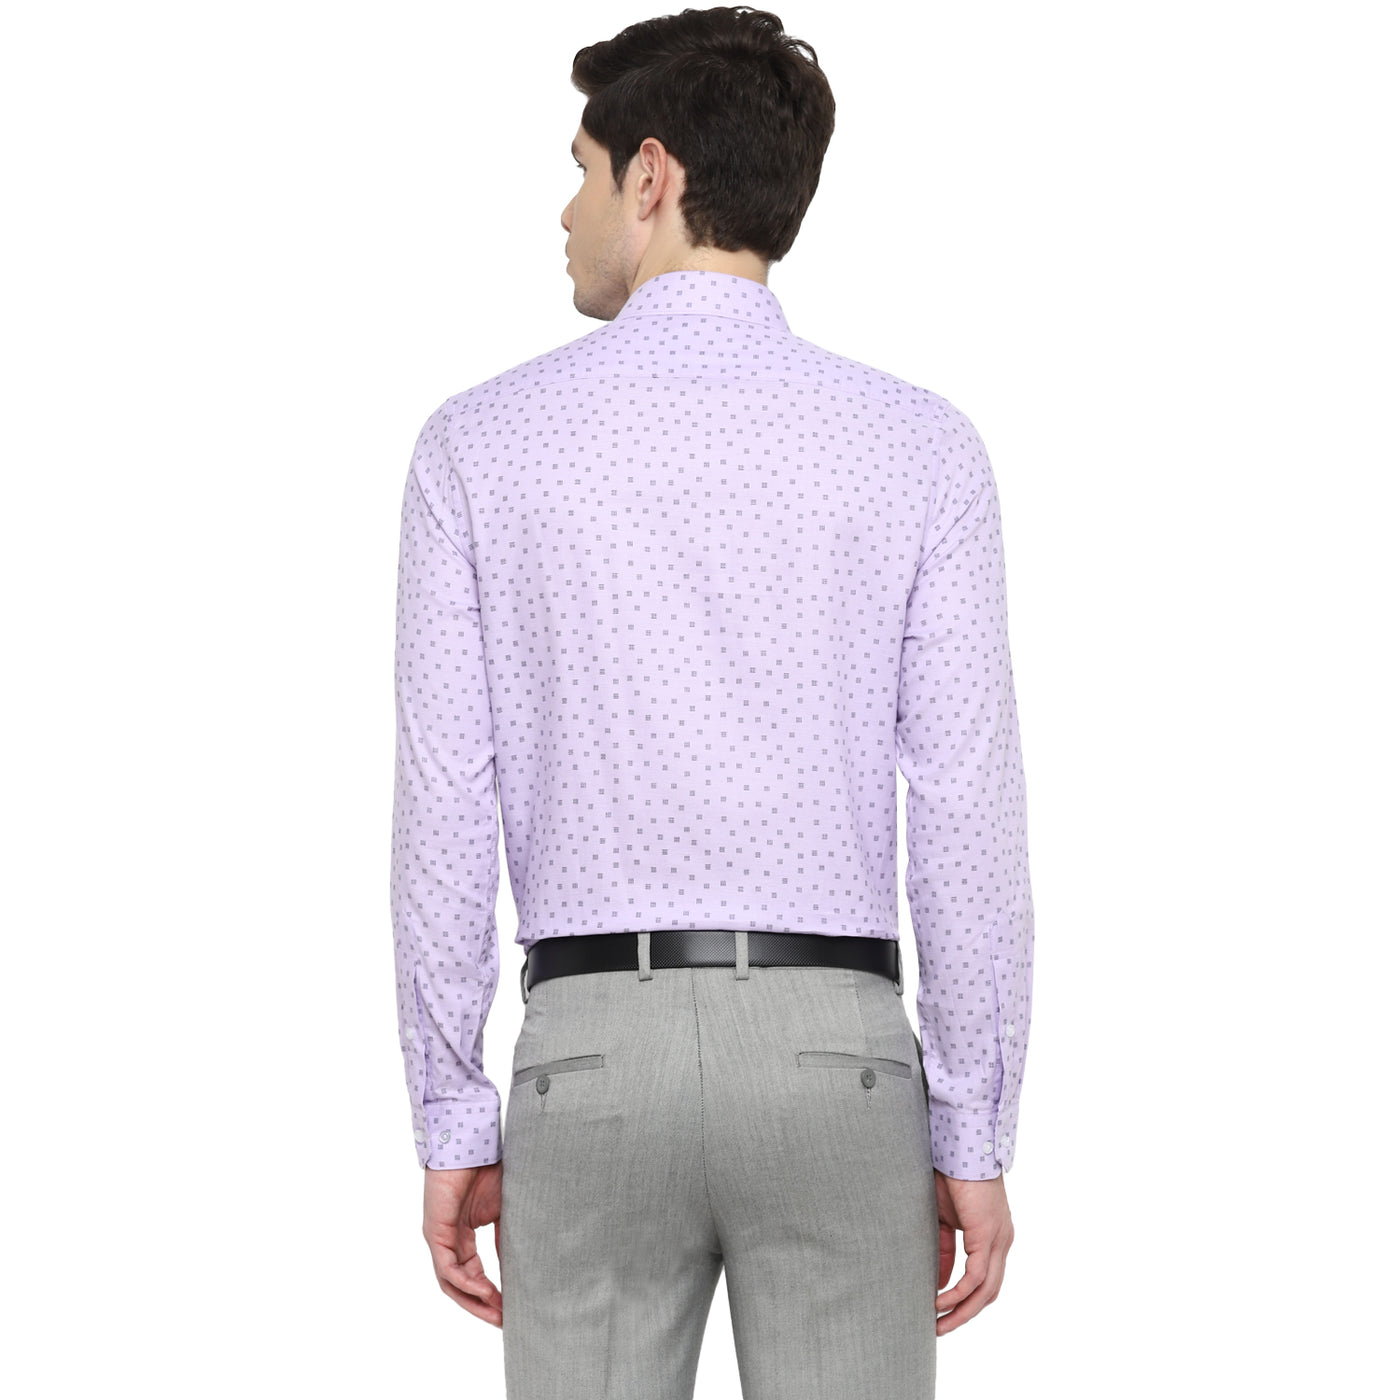 Purple Cotton Printed Slim Fit Shirts